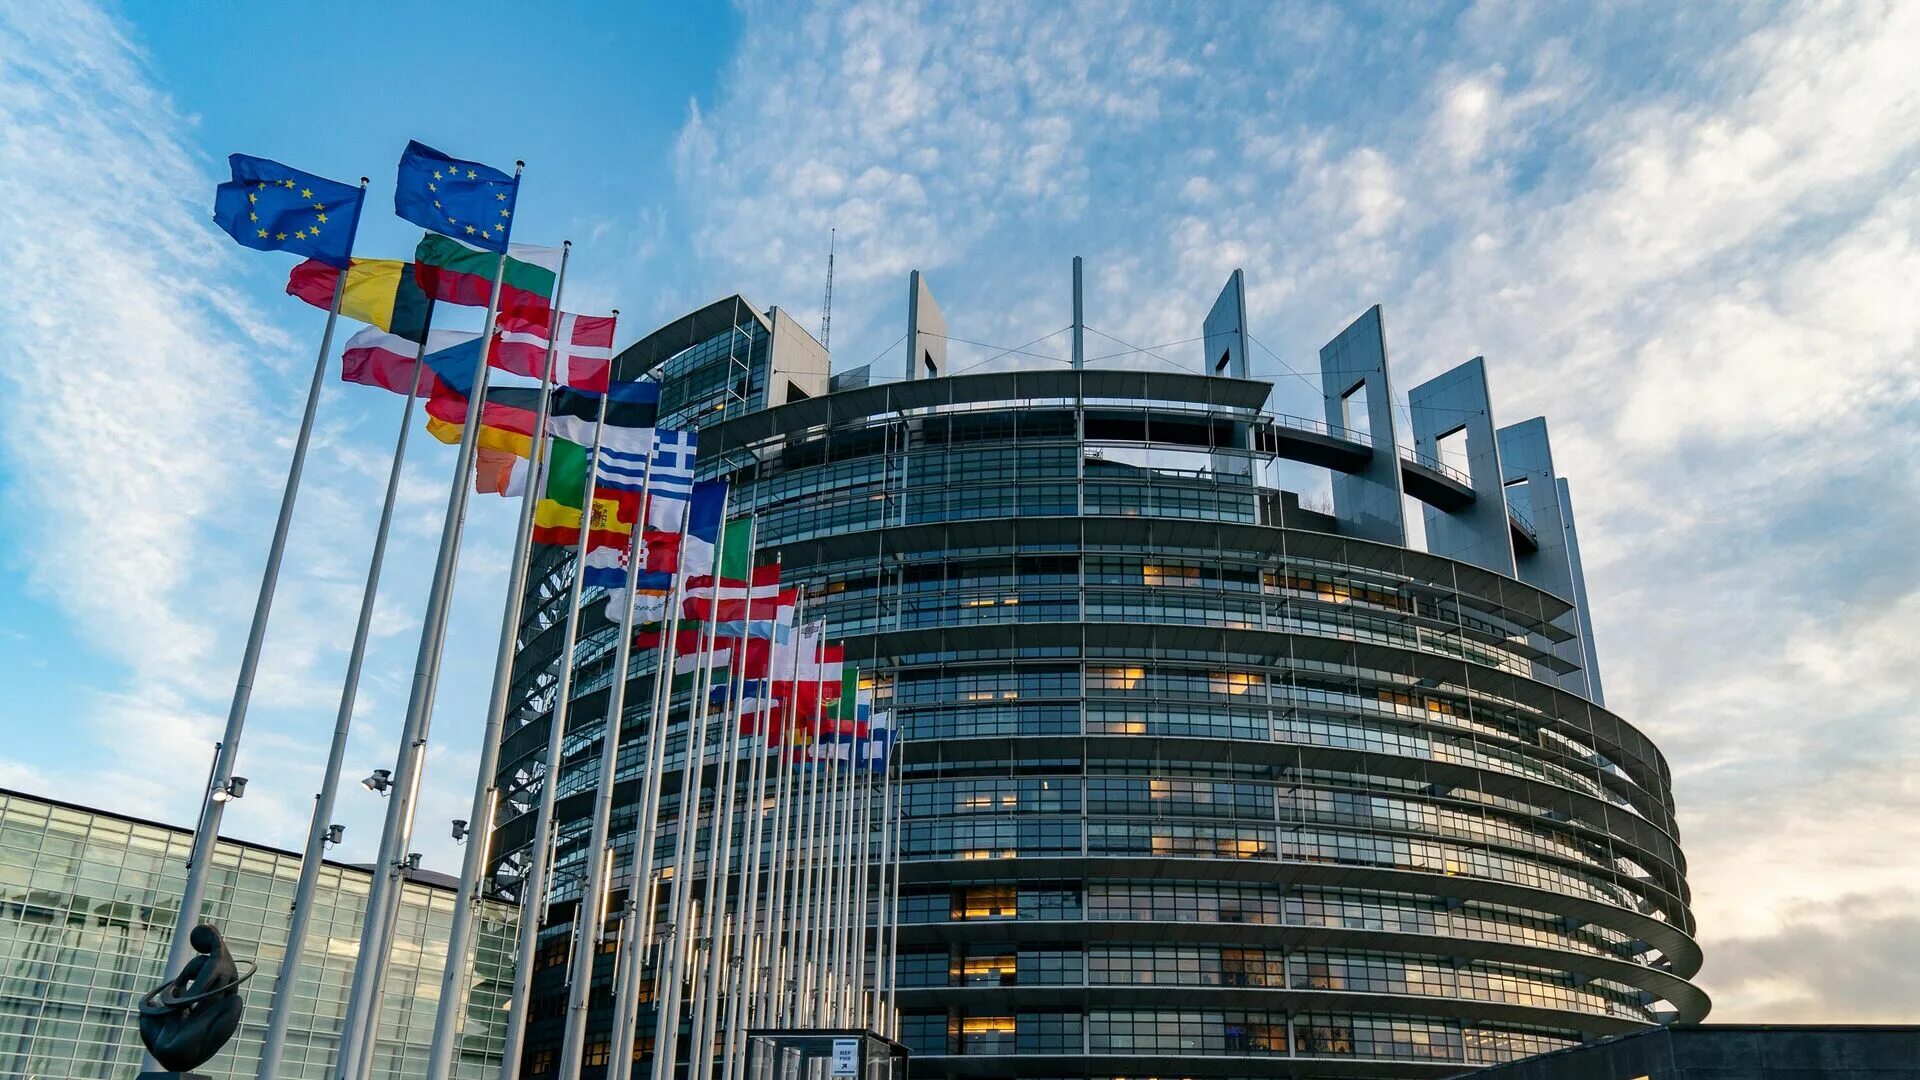 European Parliament здание в Брюсселе. Европейский парламент Страсбург. Здание Европарламента в Страсбурге. Брюссель парламент Евросоюза здание.